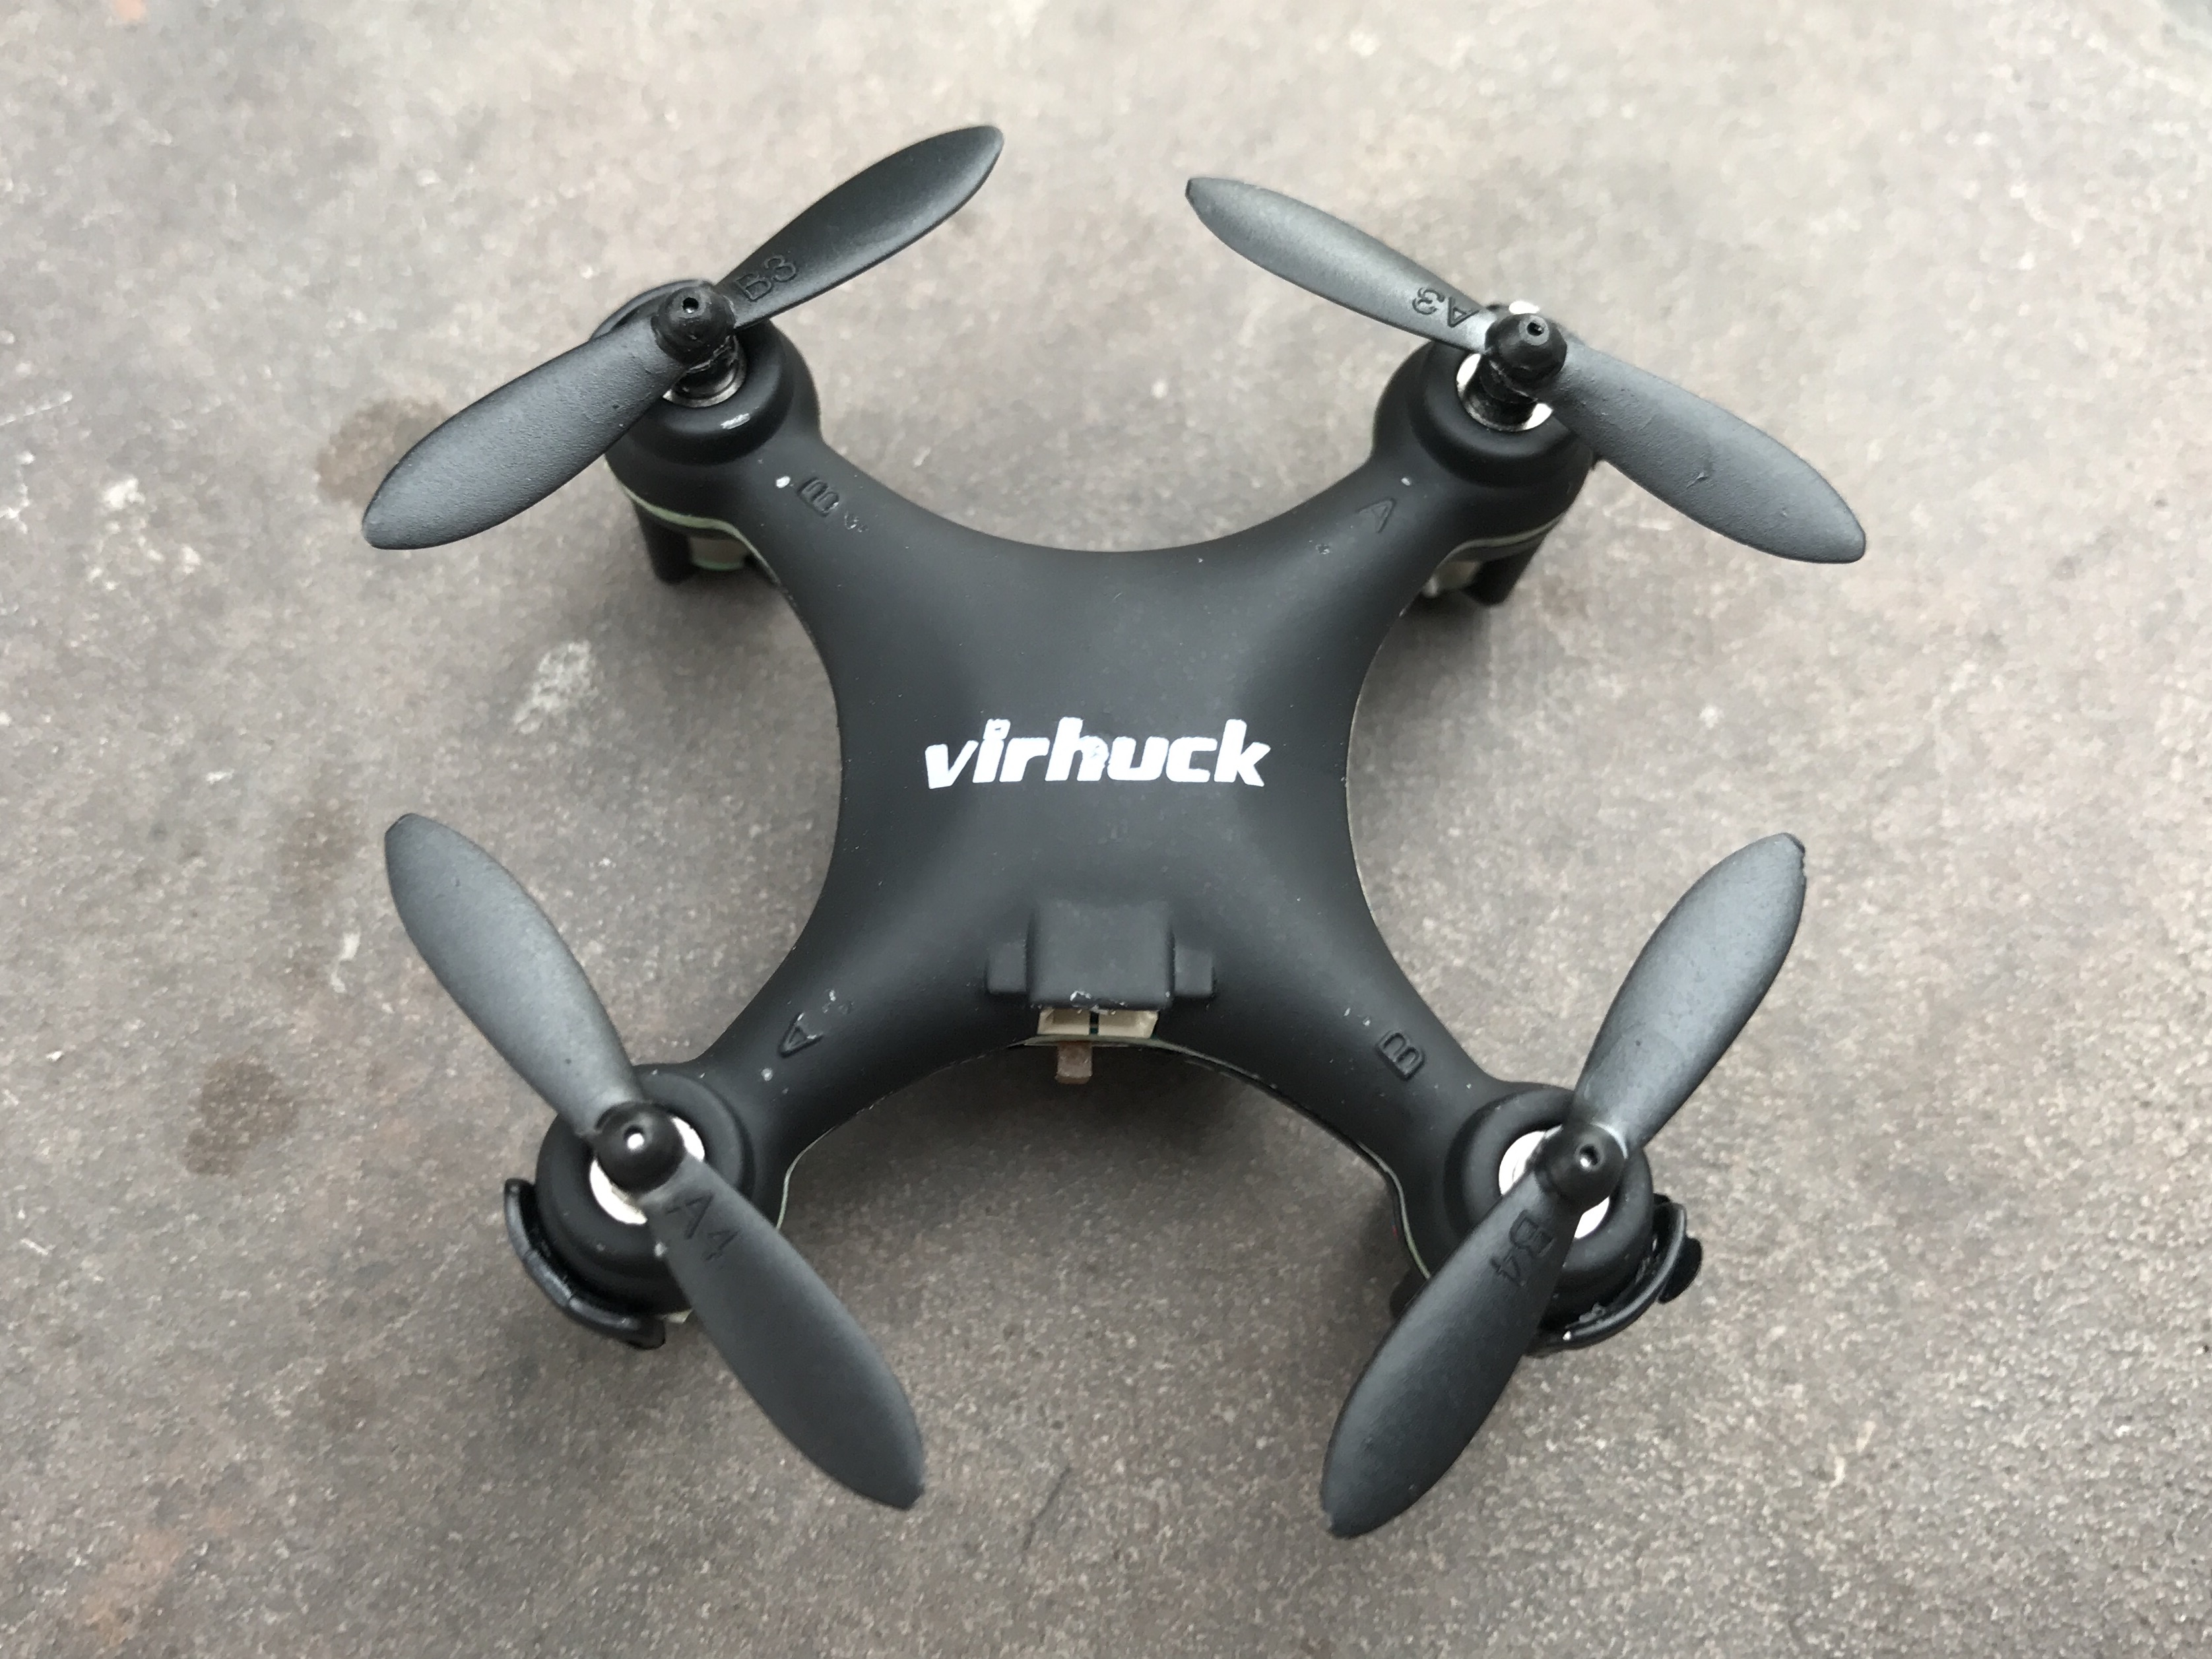 virhuck gb202 mini drone